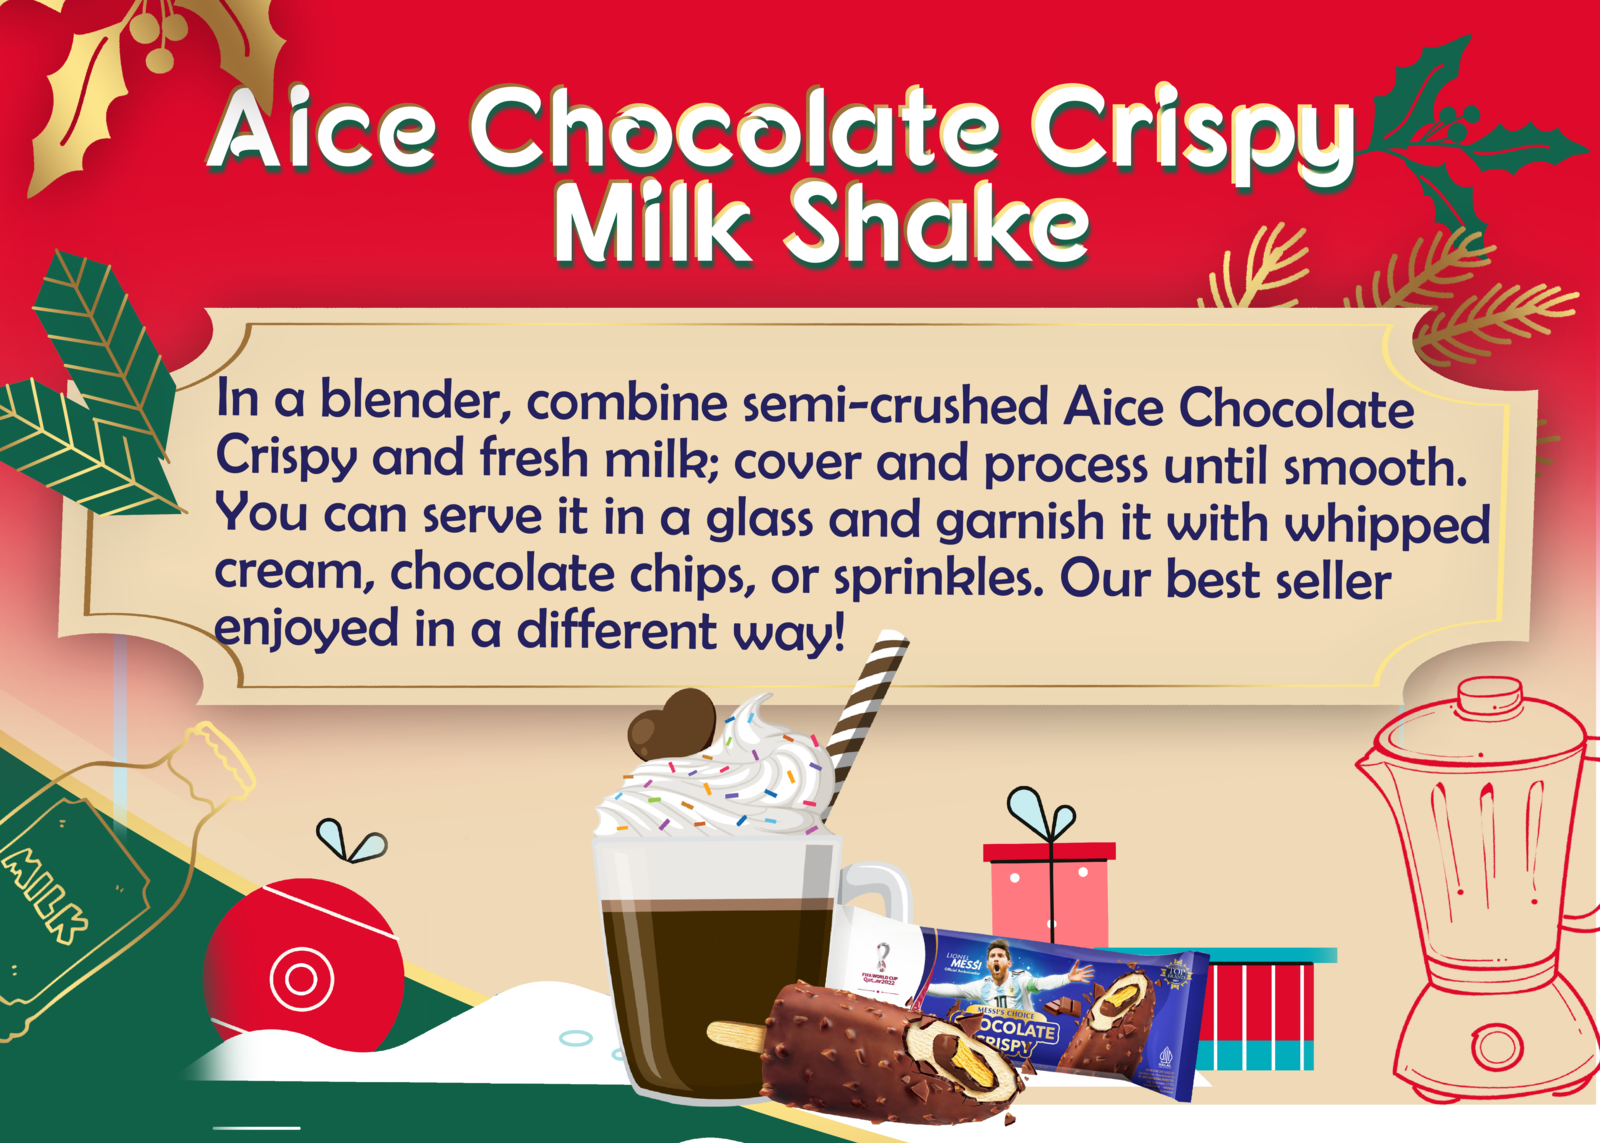 Aice_Chocolate_Crispy_Milk_Shake